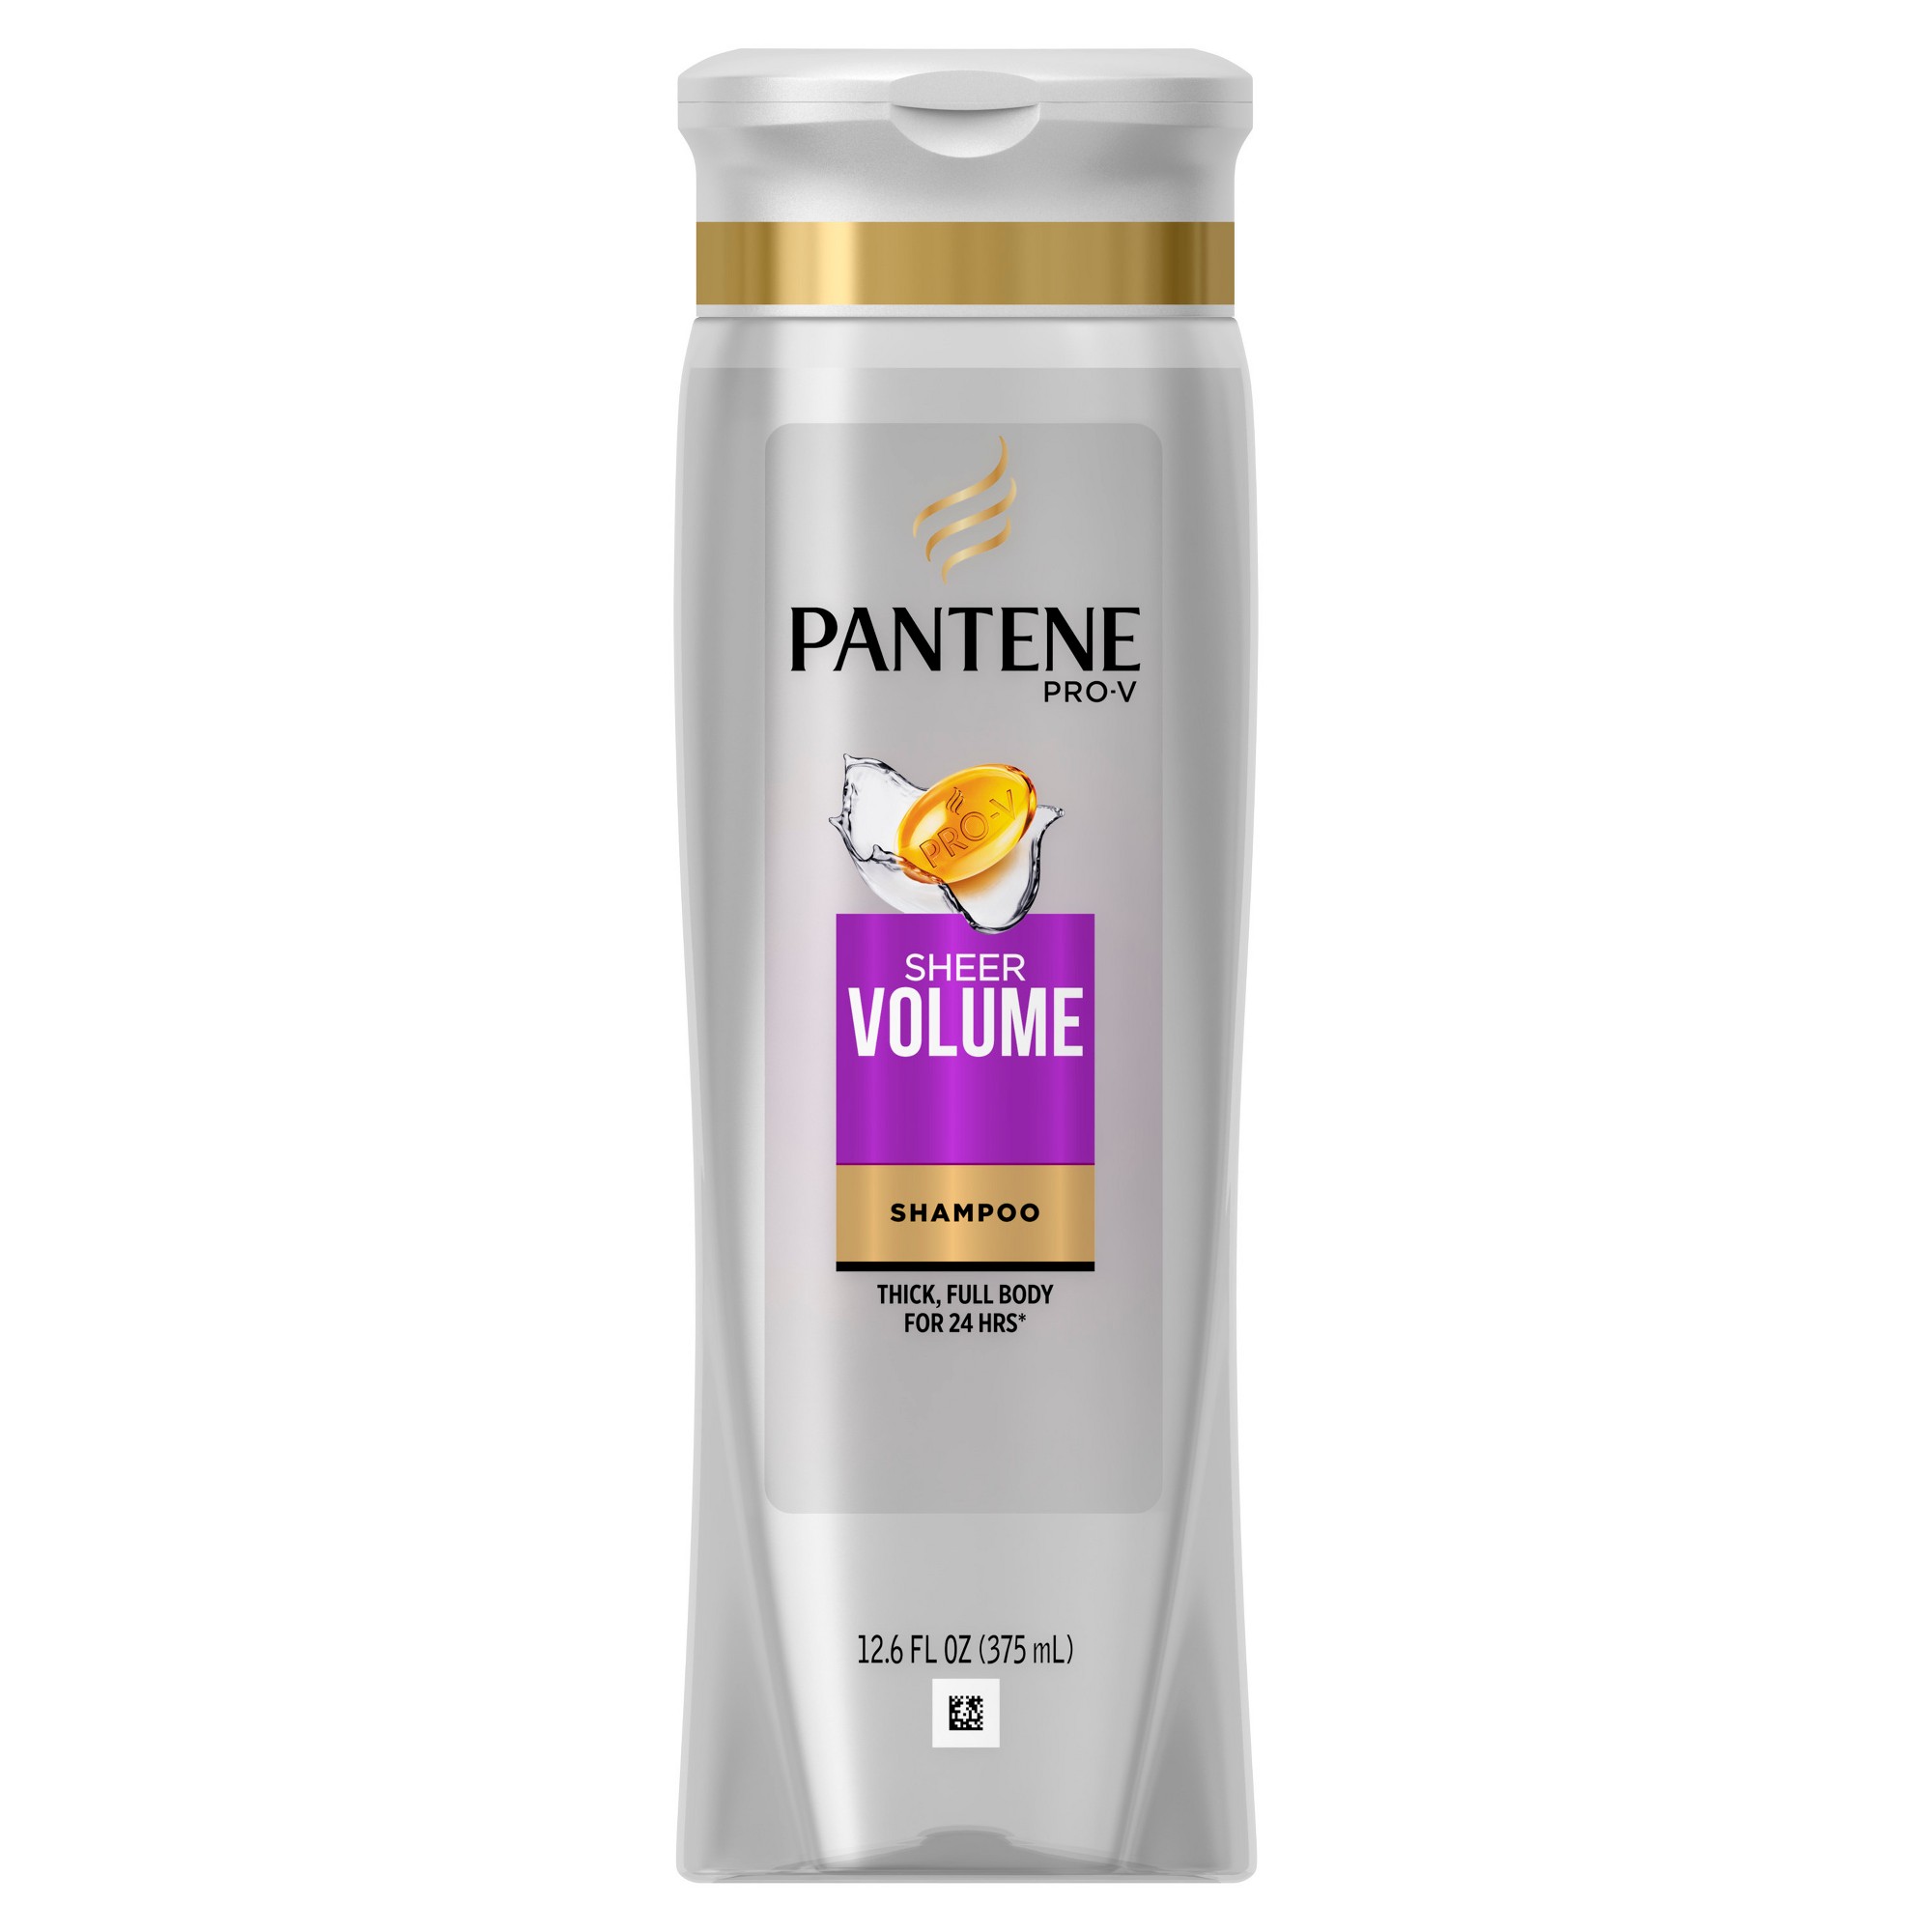 Pantene Pro-V Sheer Volume Shampoo - 12.6 fl oz